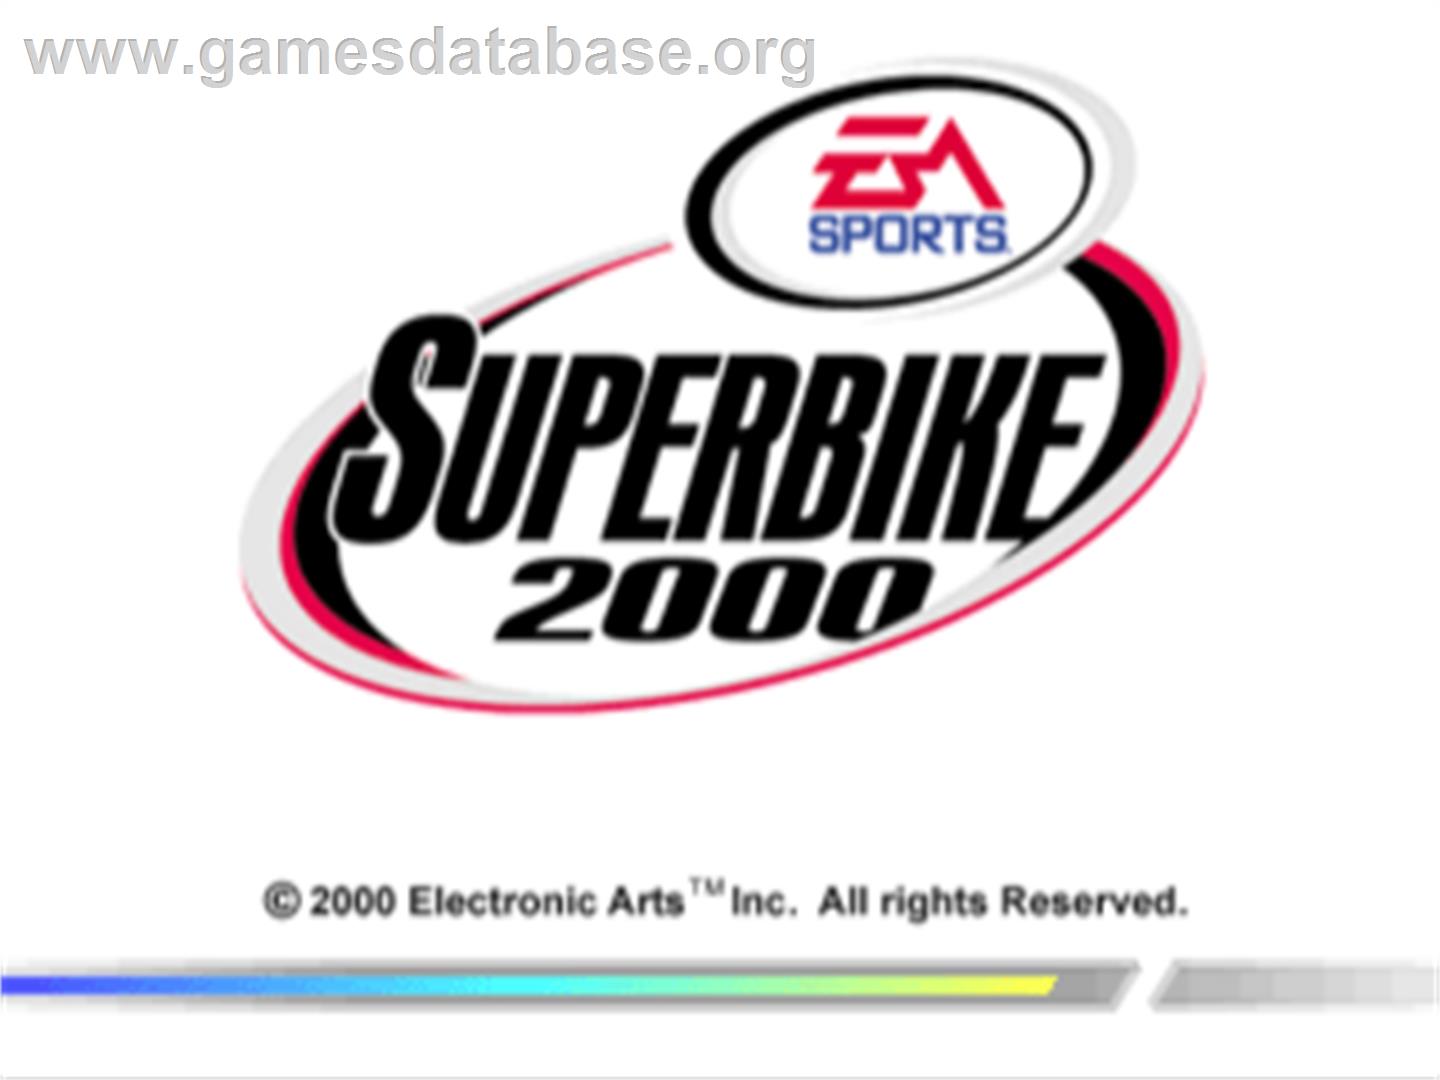 Supercross 2000 - Sony Playstation - Artwork - Title Screen